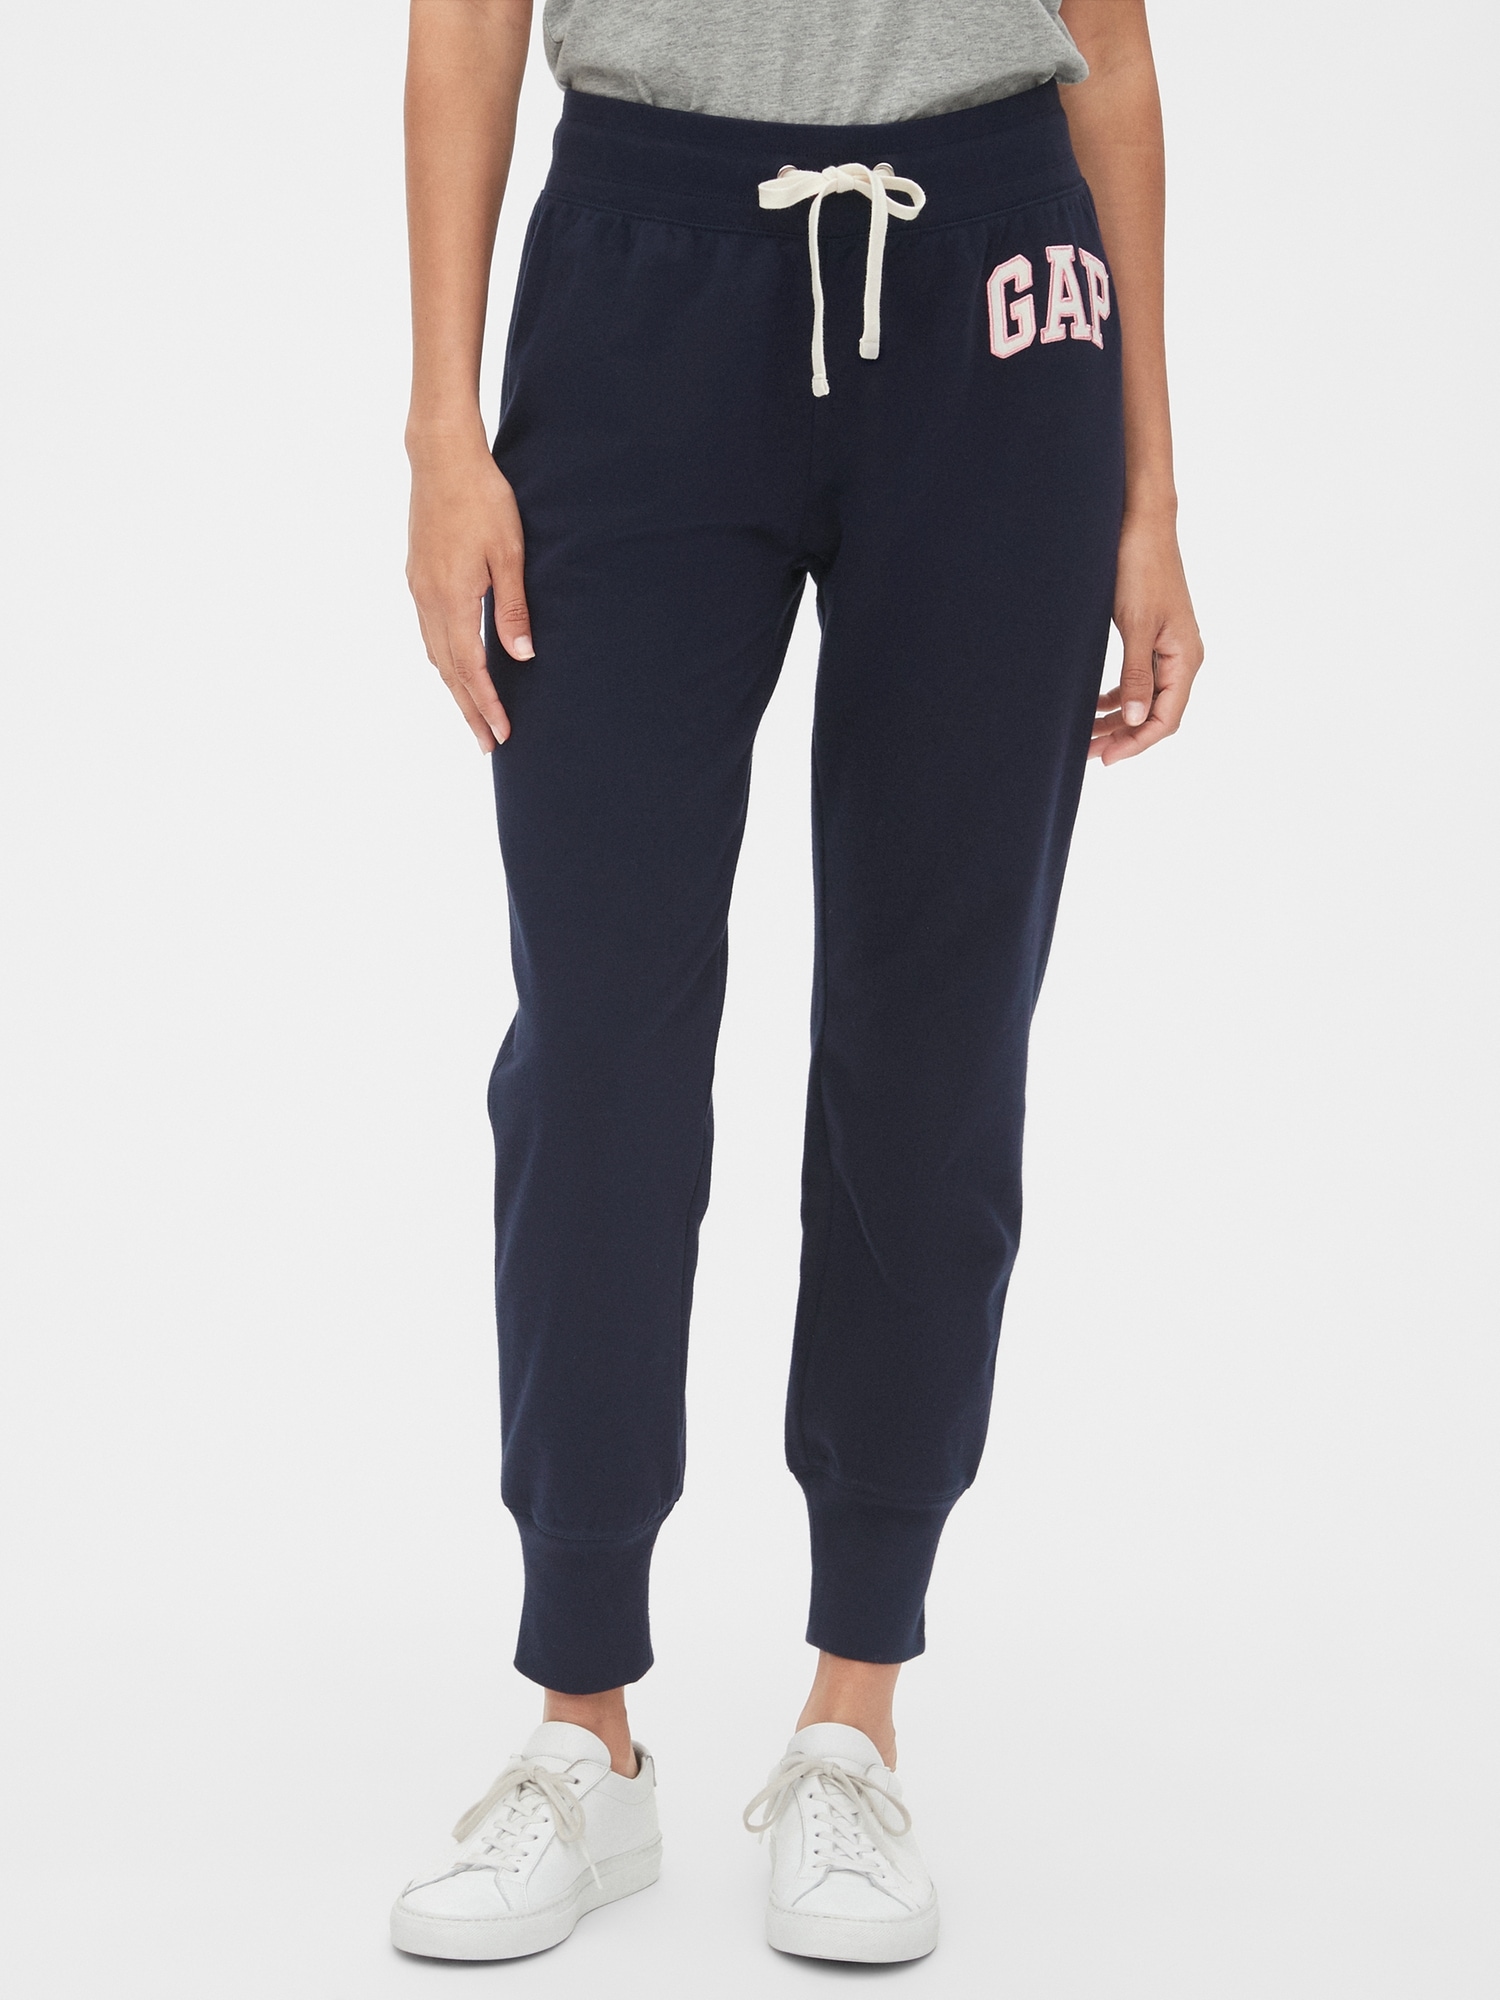 Buy Gap Logo Slim Fit Fleece Lined Joggers from the Gap online shop